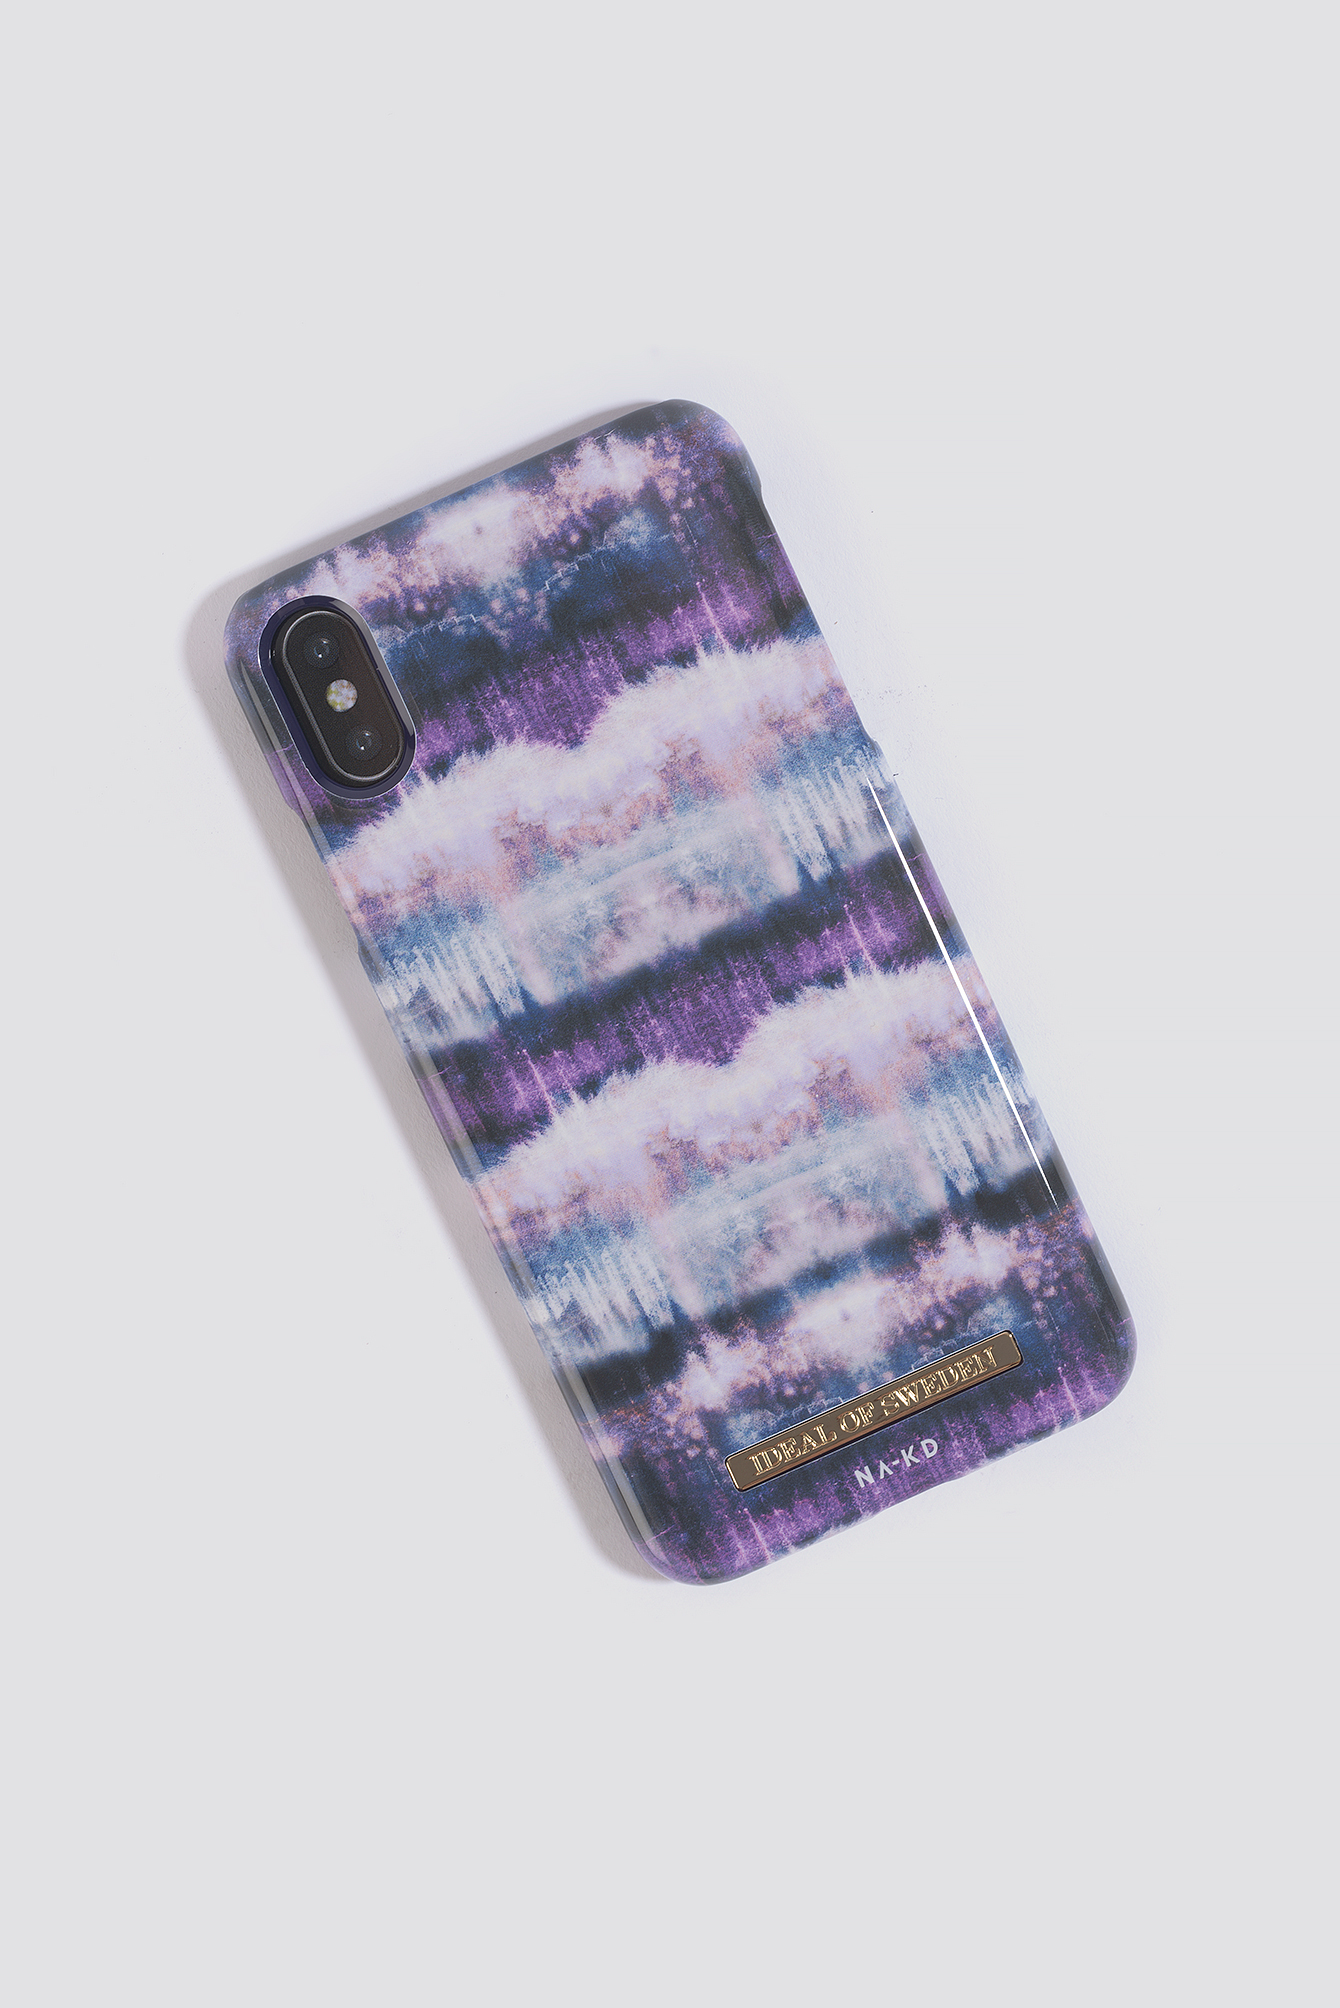 Lavender Rain iPhone X/XS Max Case